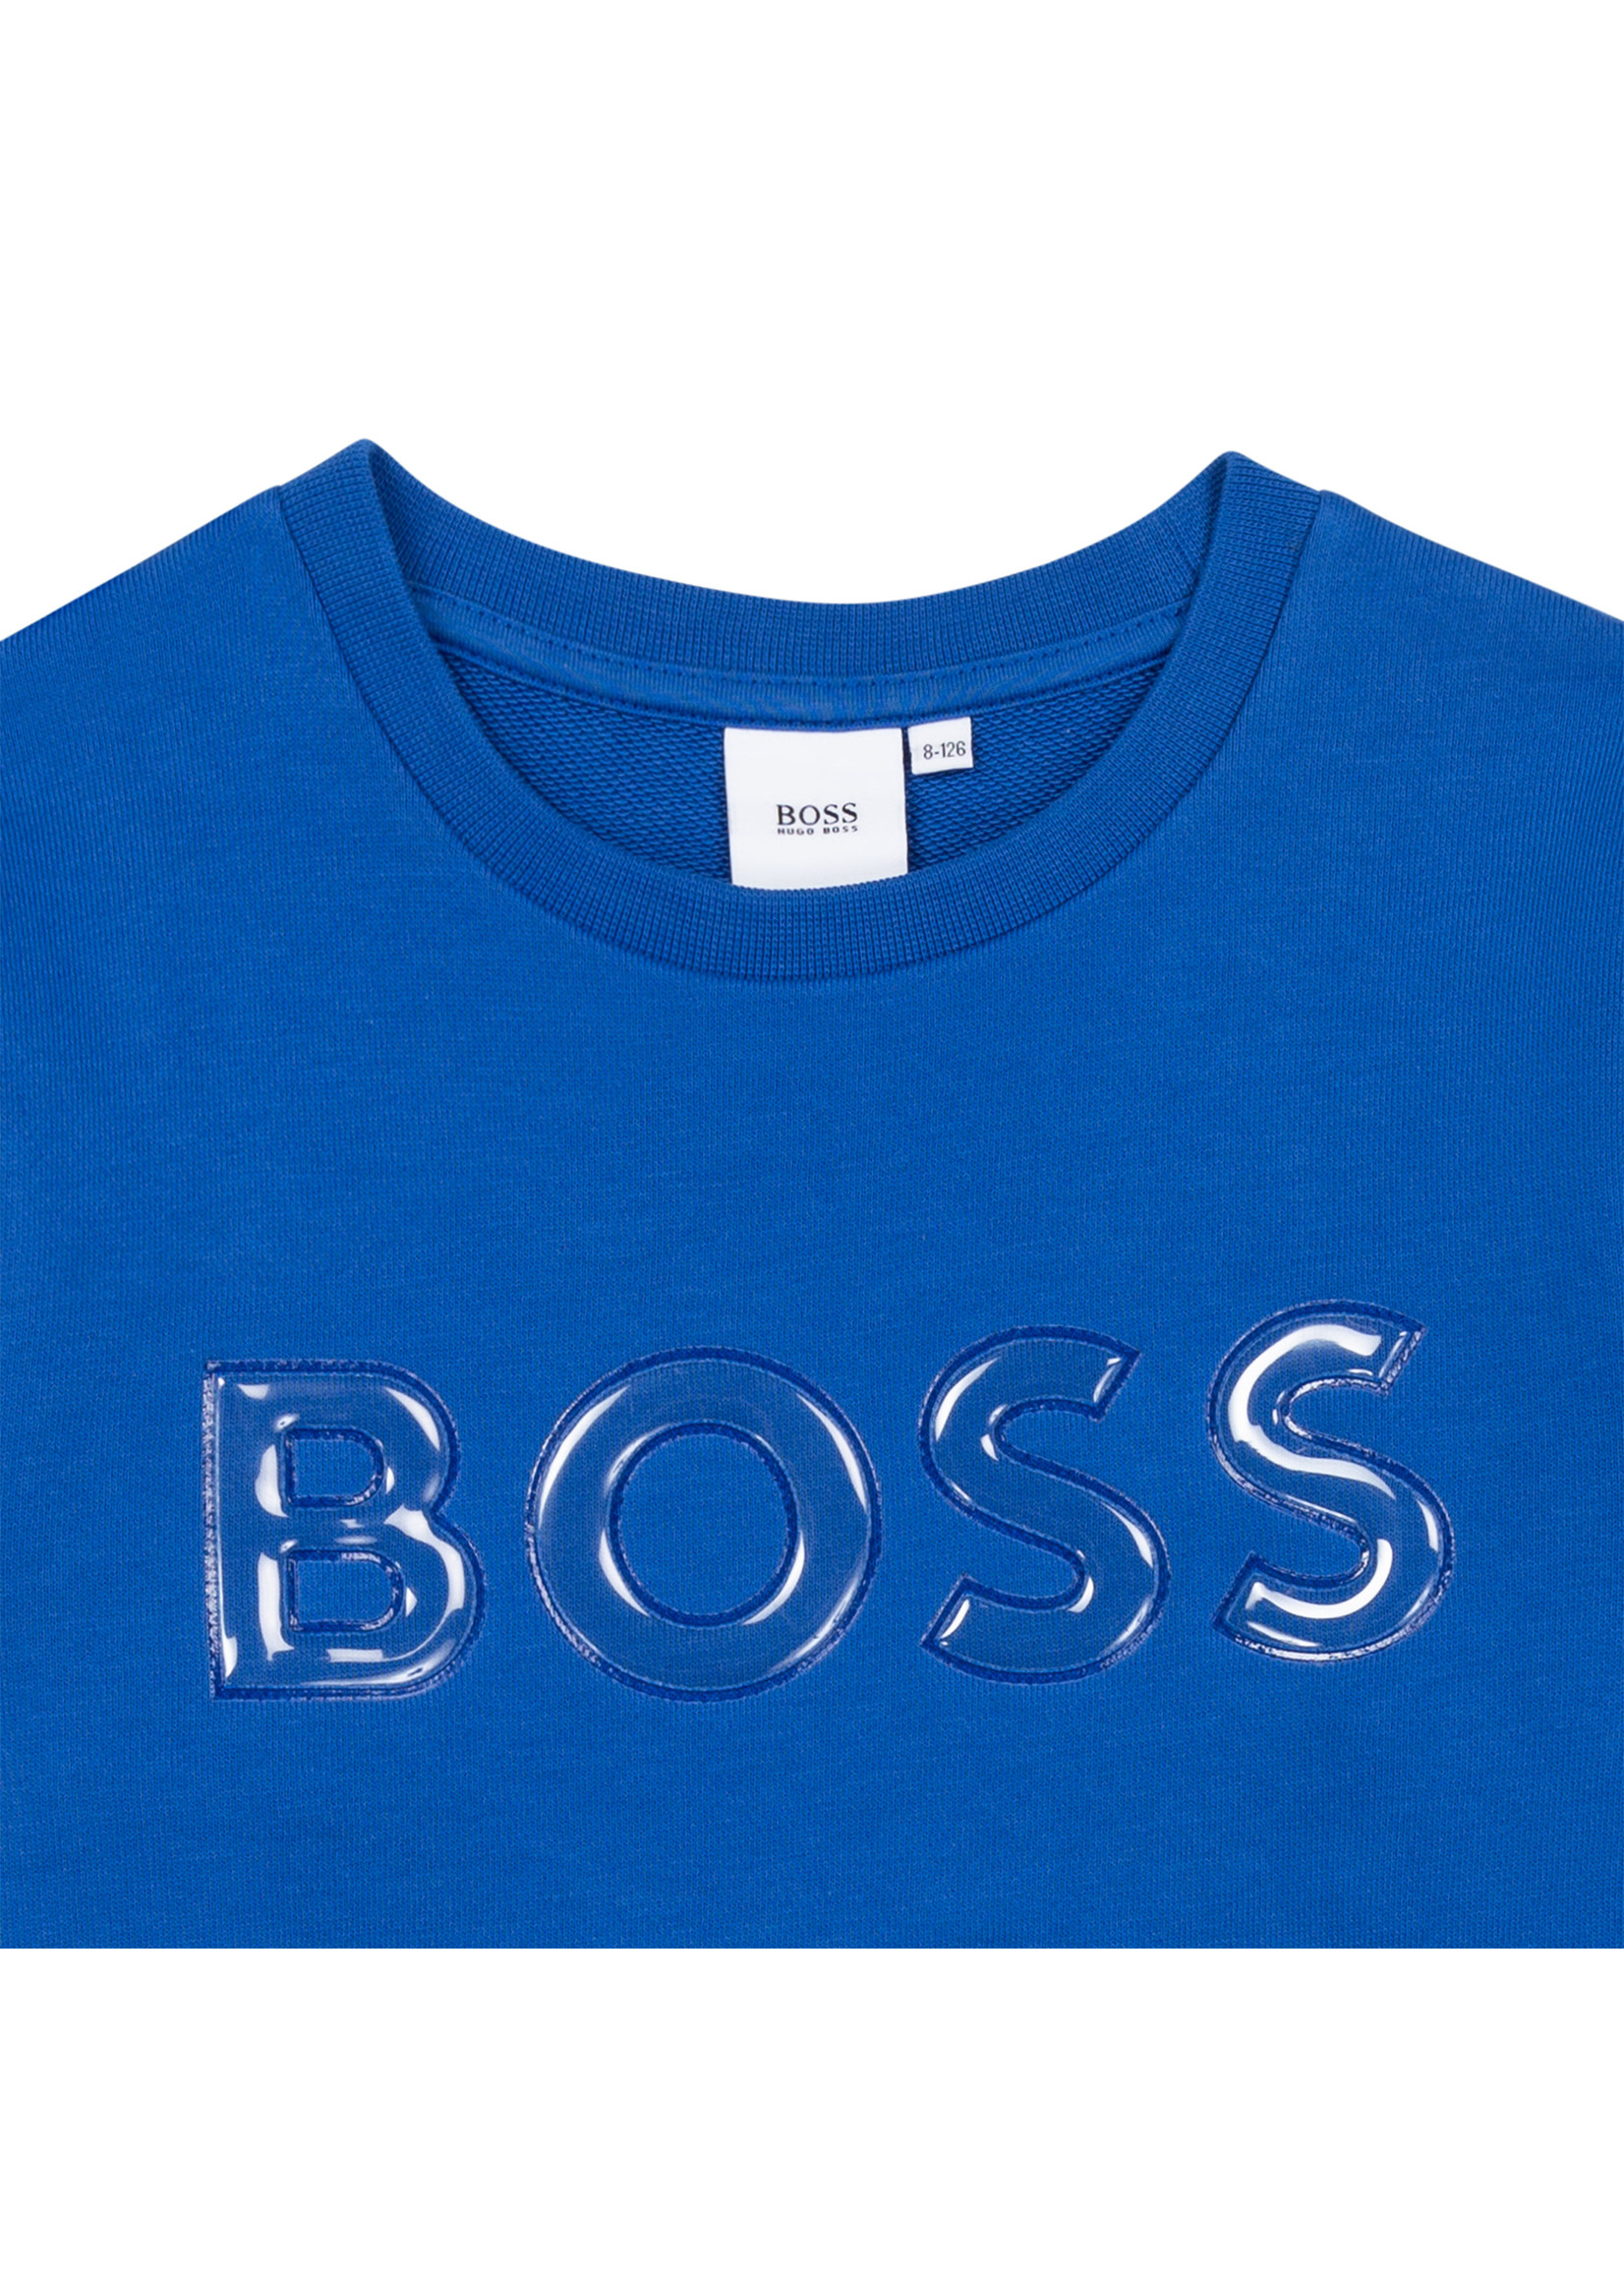 BOSS BOSS Boy sweater royal blue - J25N99